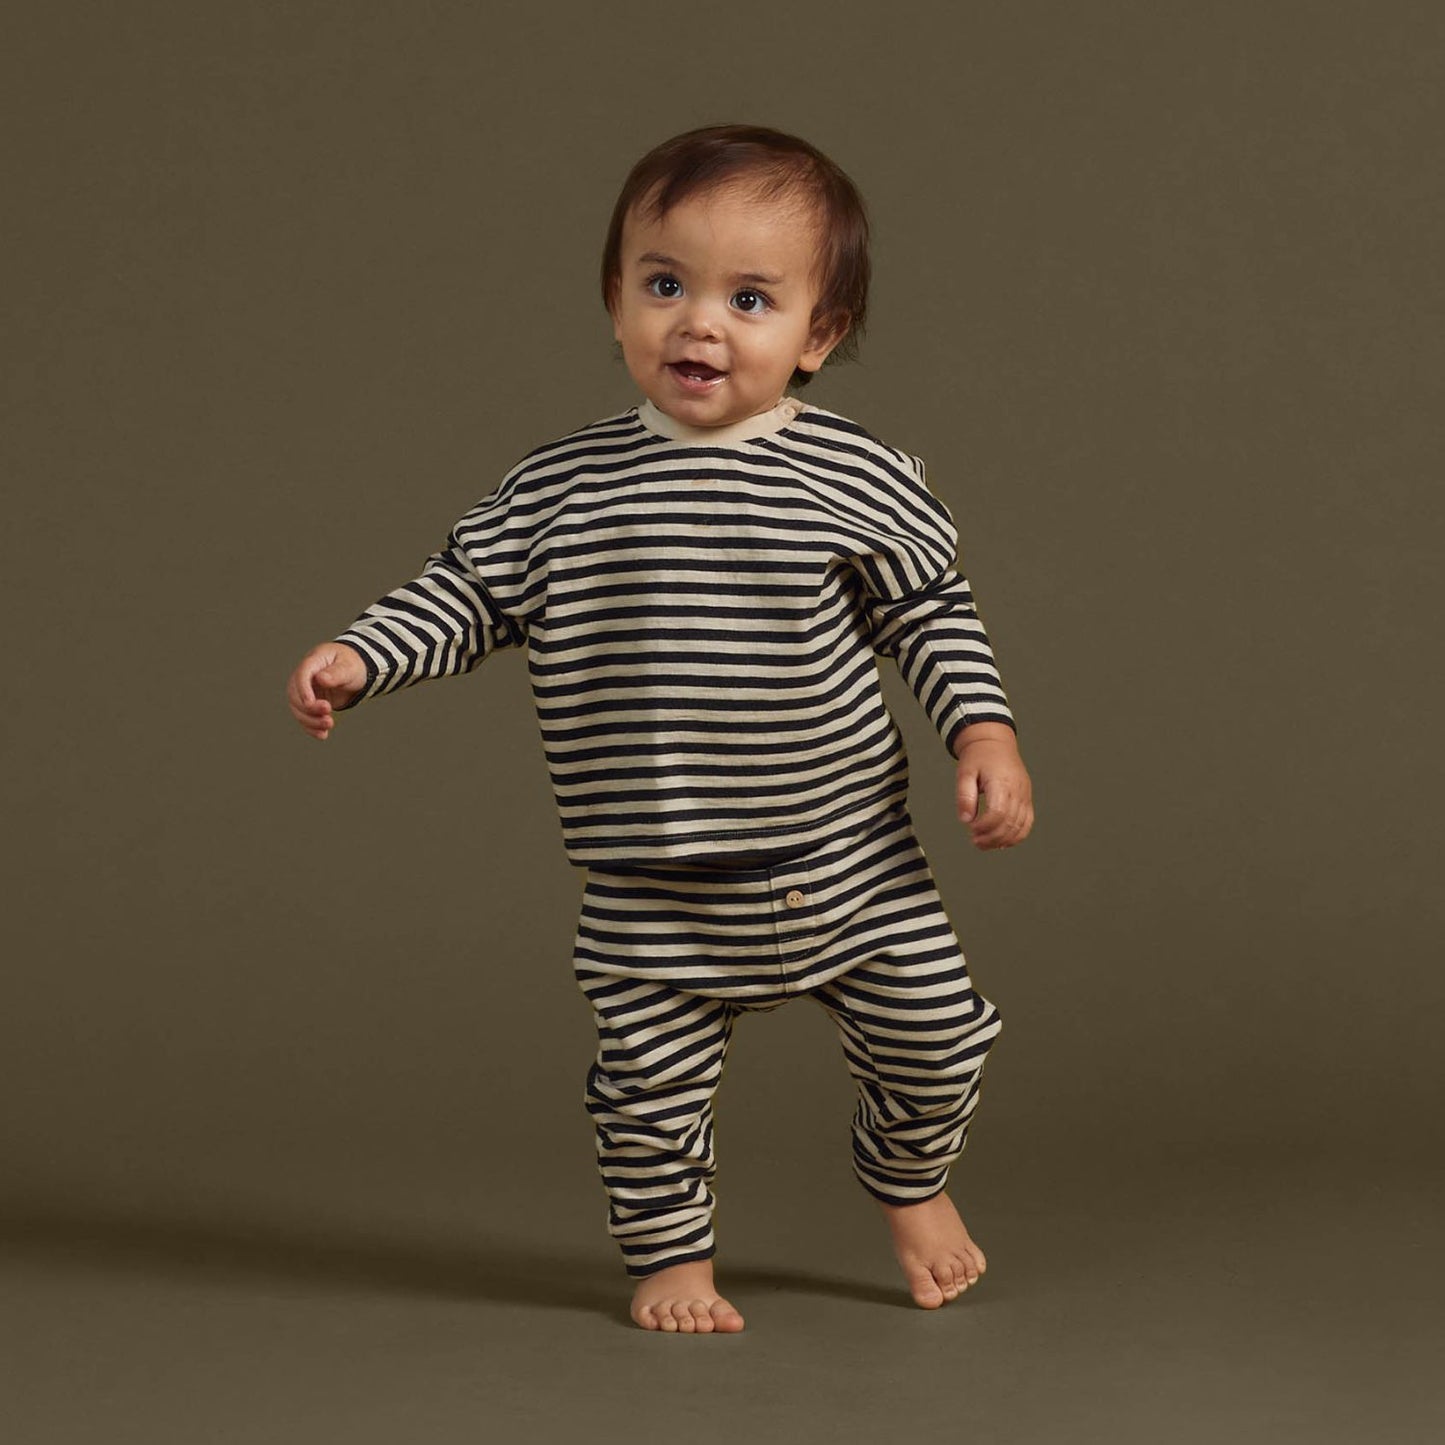 Toddler wearing Rylee and Cru Baby Cru Pant - Black Stripe